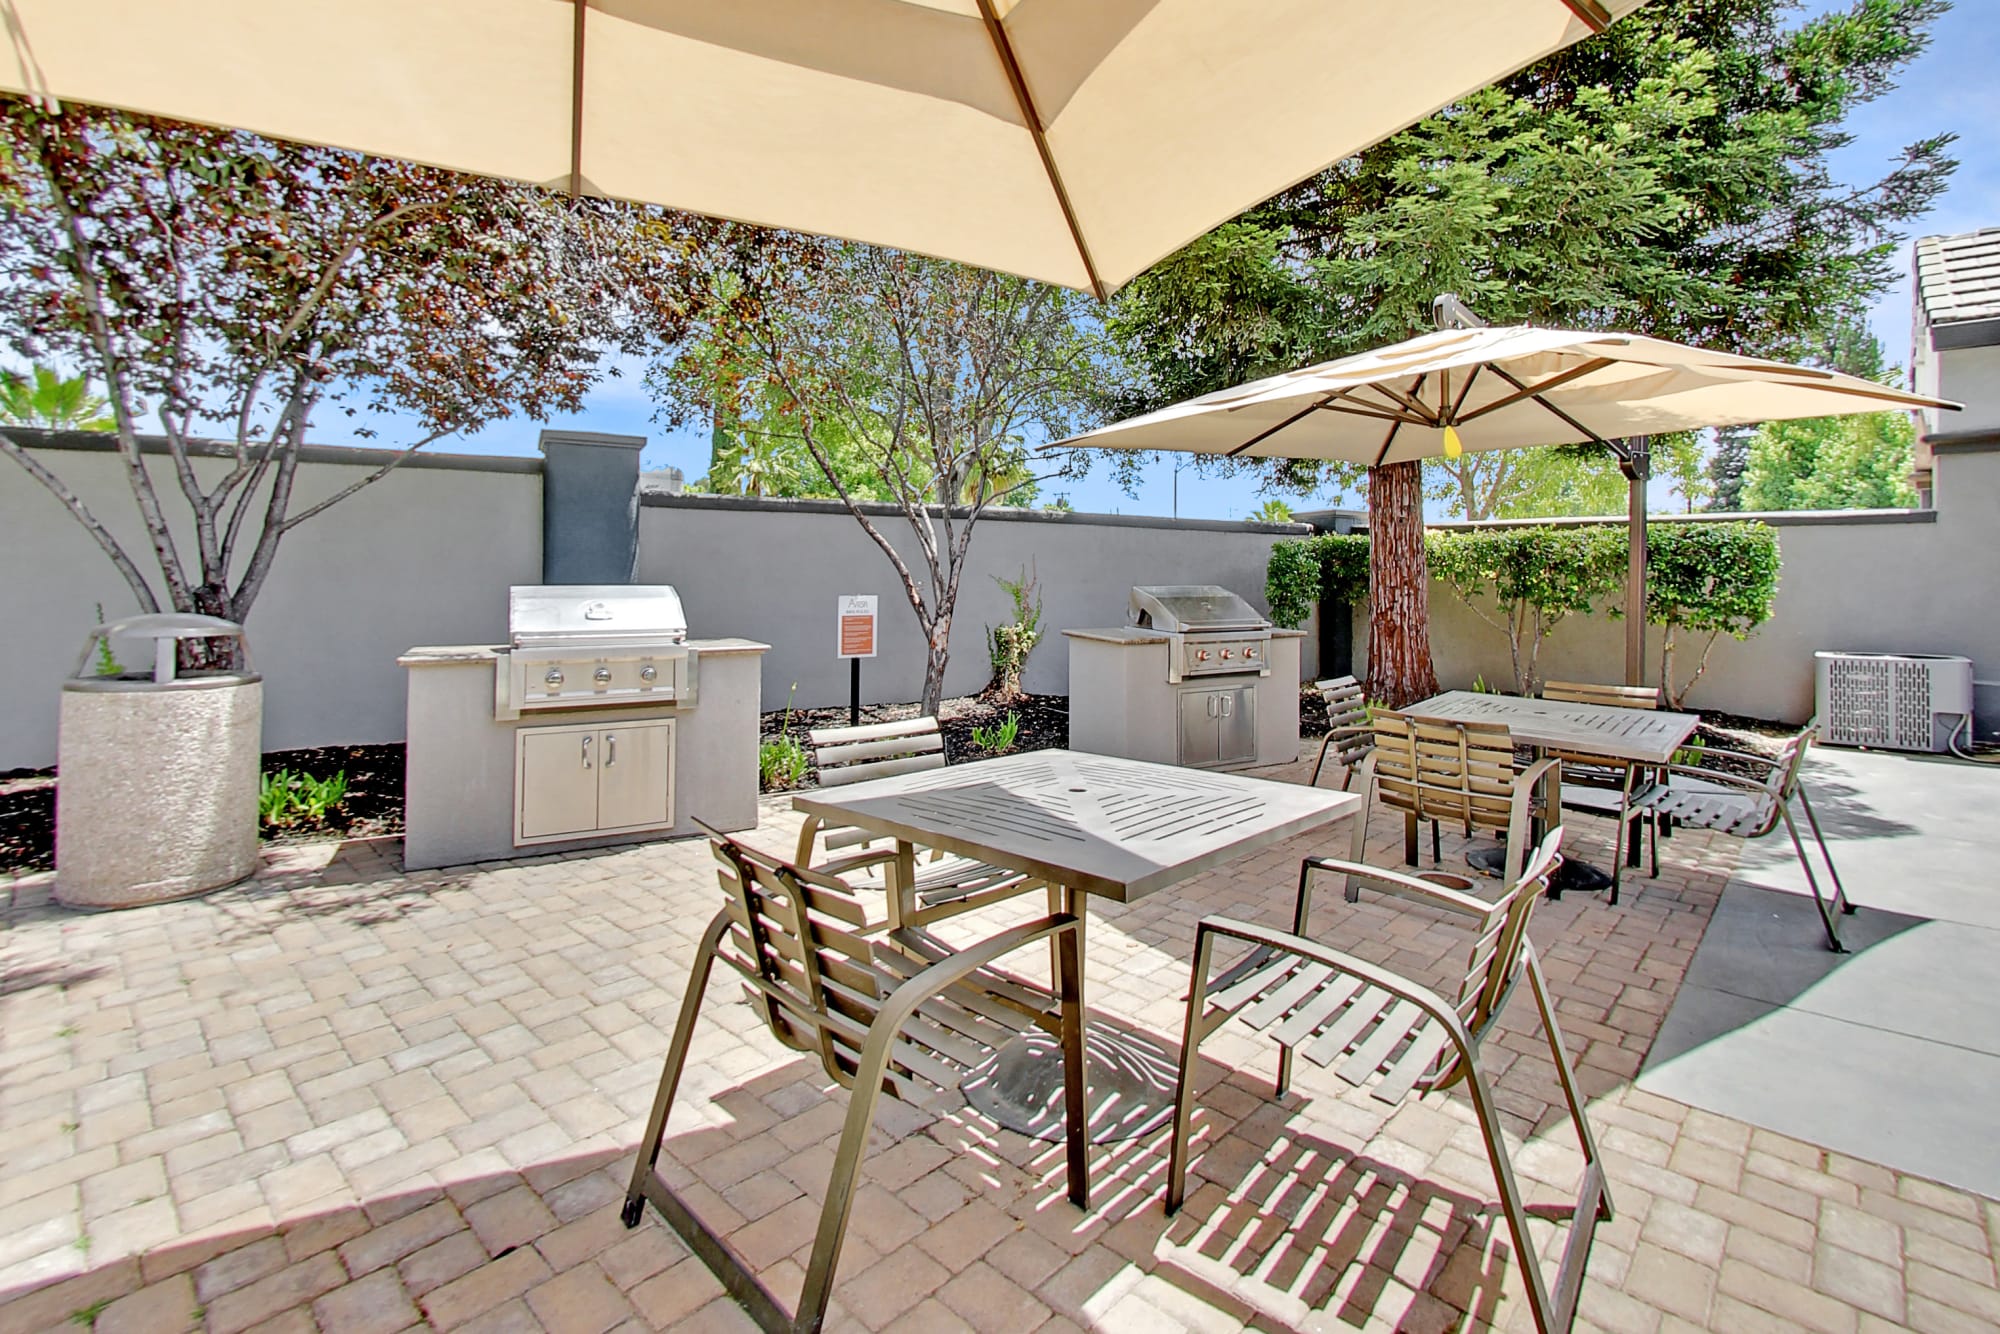 Outdoor grilling area at Avion Apartments in Rancho Cordova, California